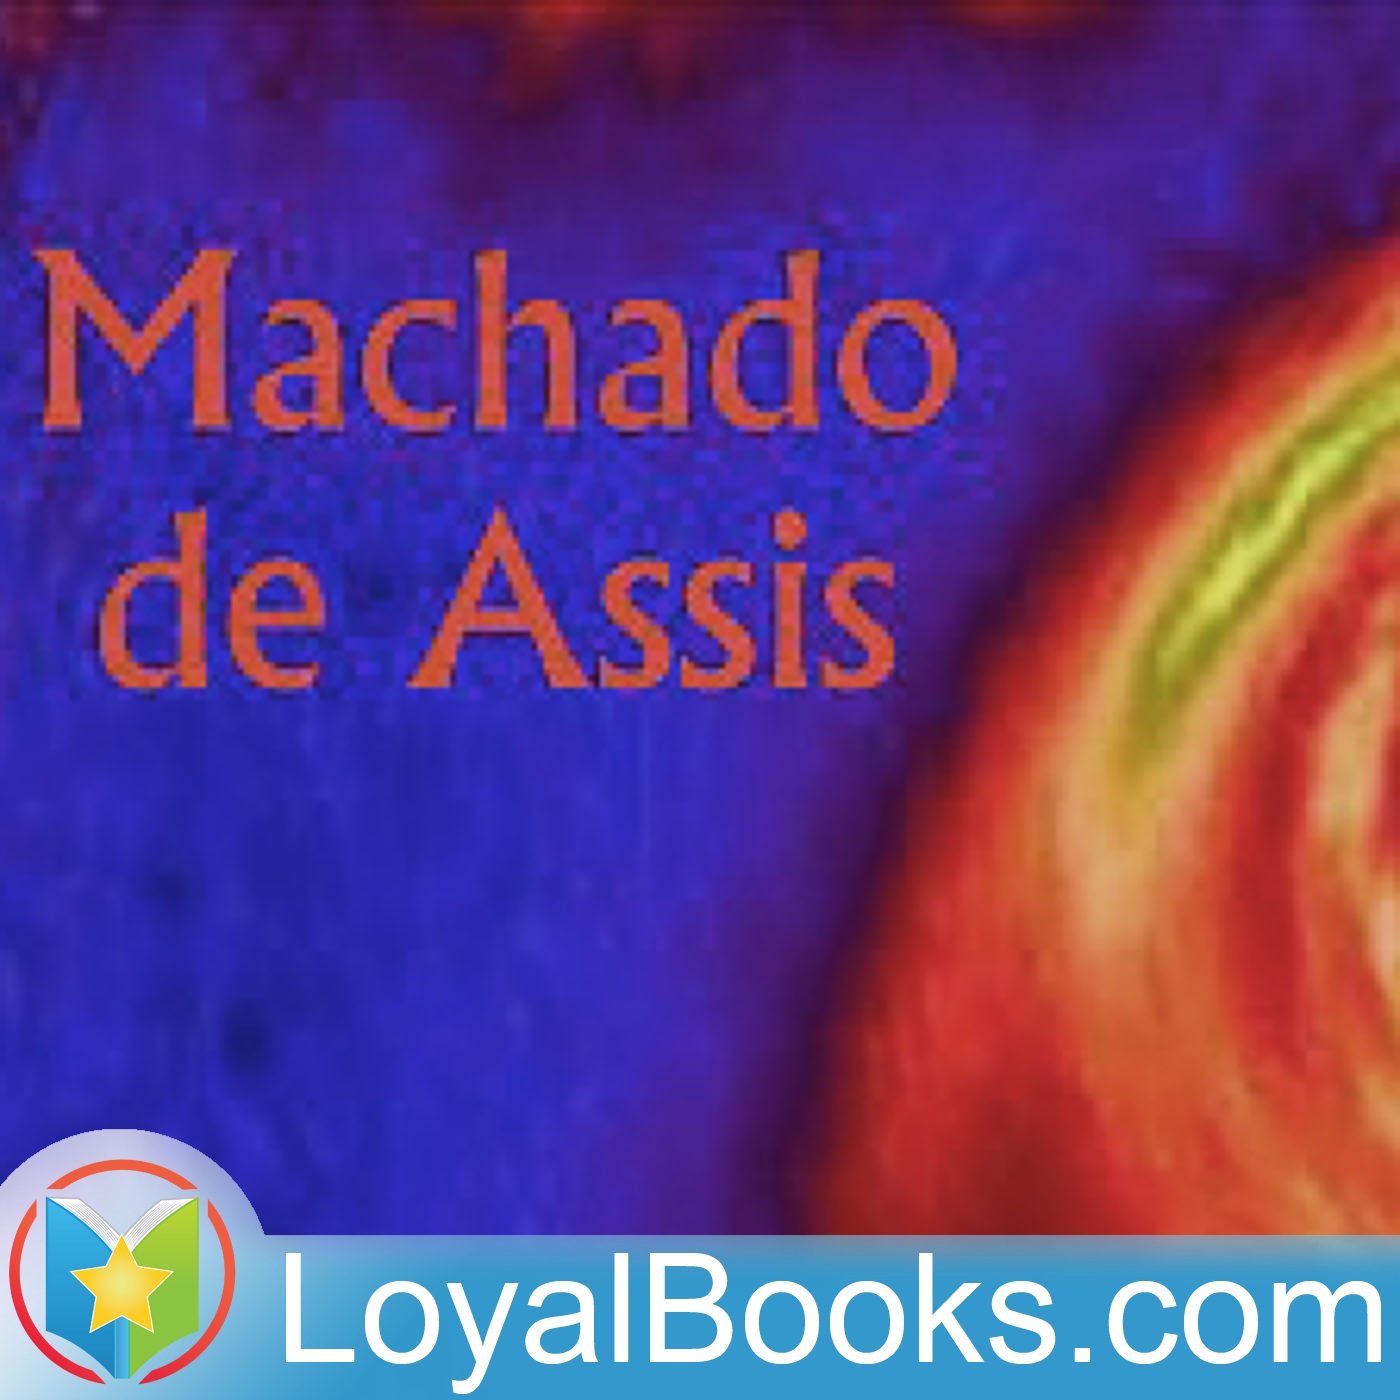 O Alienista by Machado de Assis